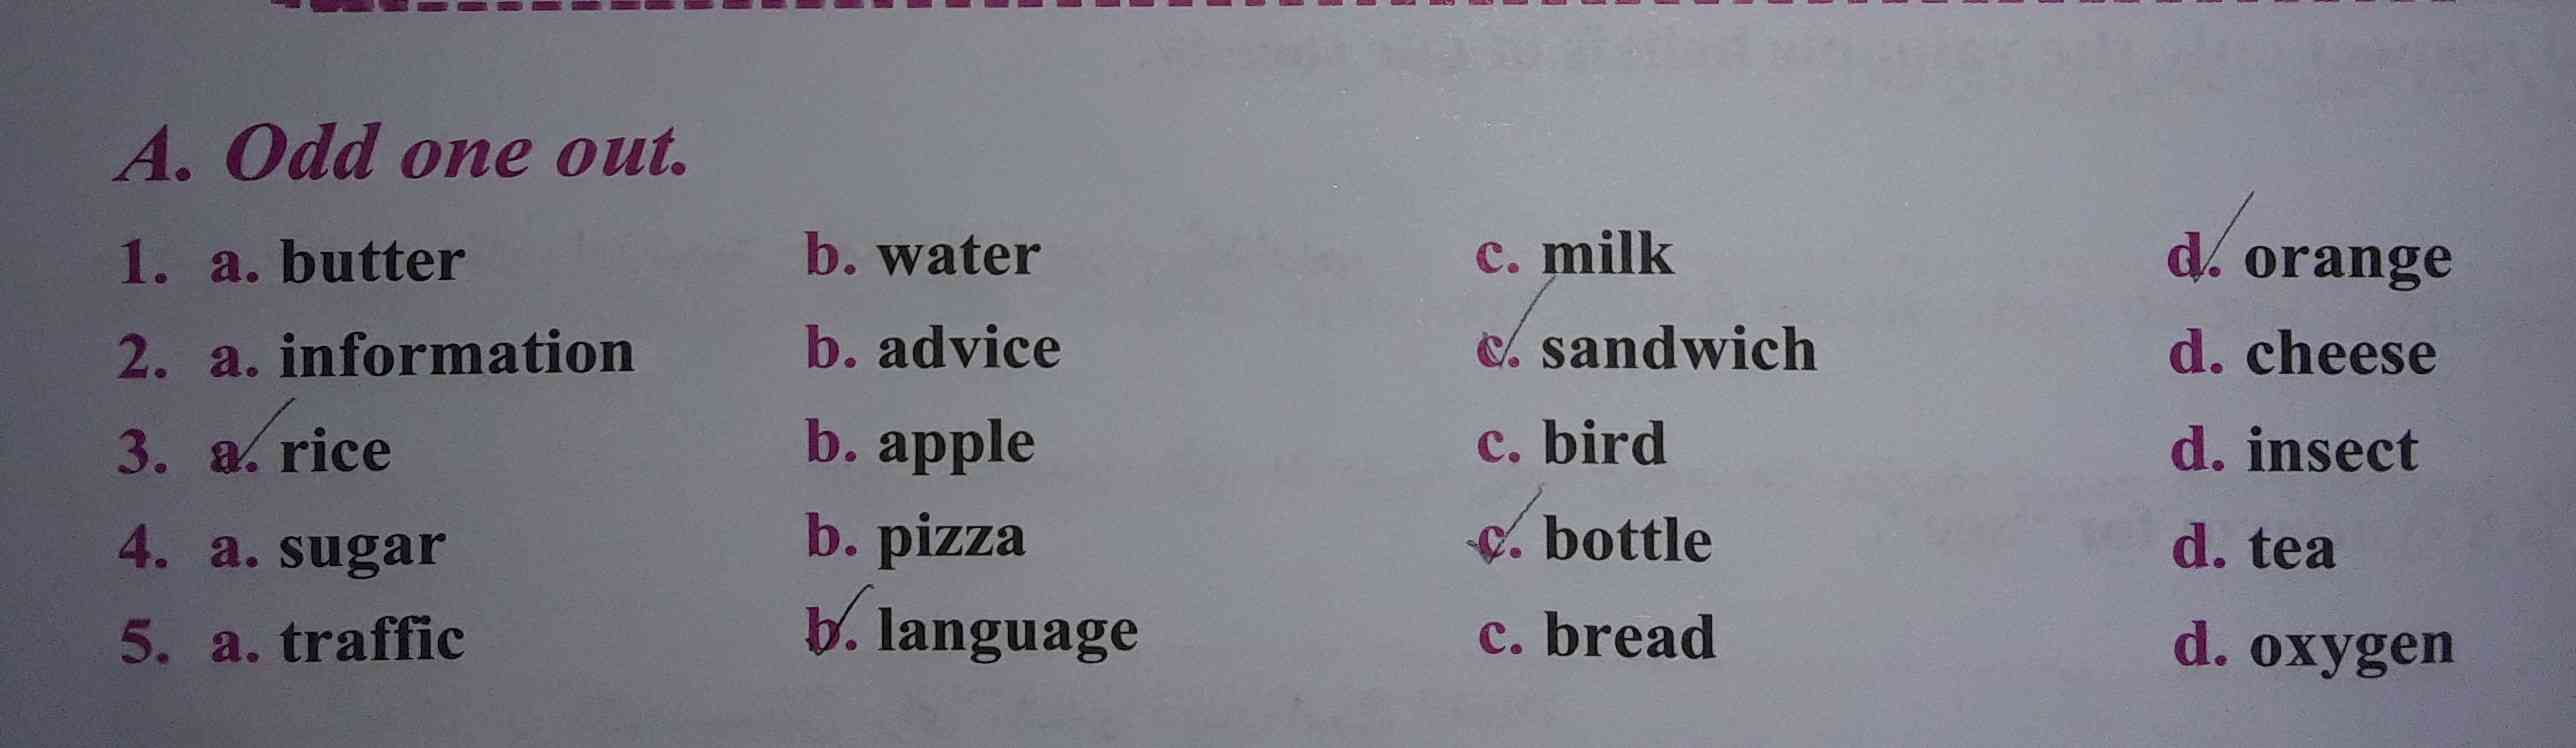 odd one out.
a.butter
b.water
c.milk
d.orange